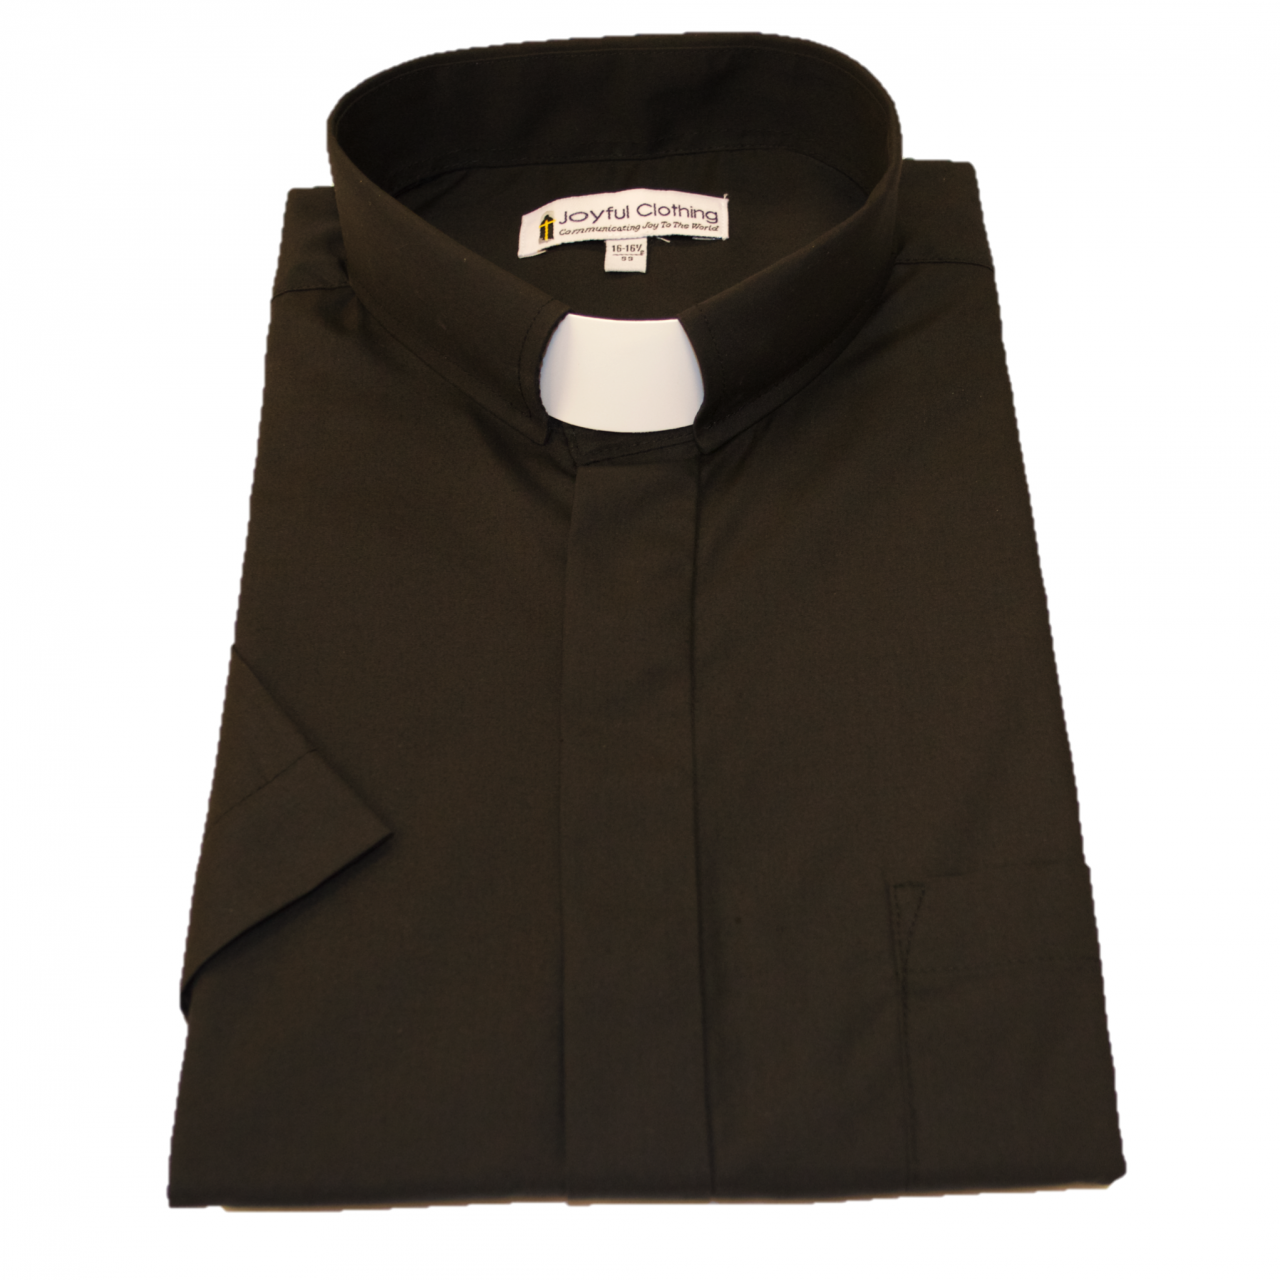 Mens Short Sleeves Tab Collar Clergy Shirt Black